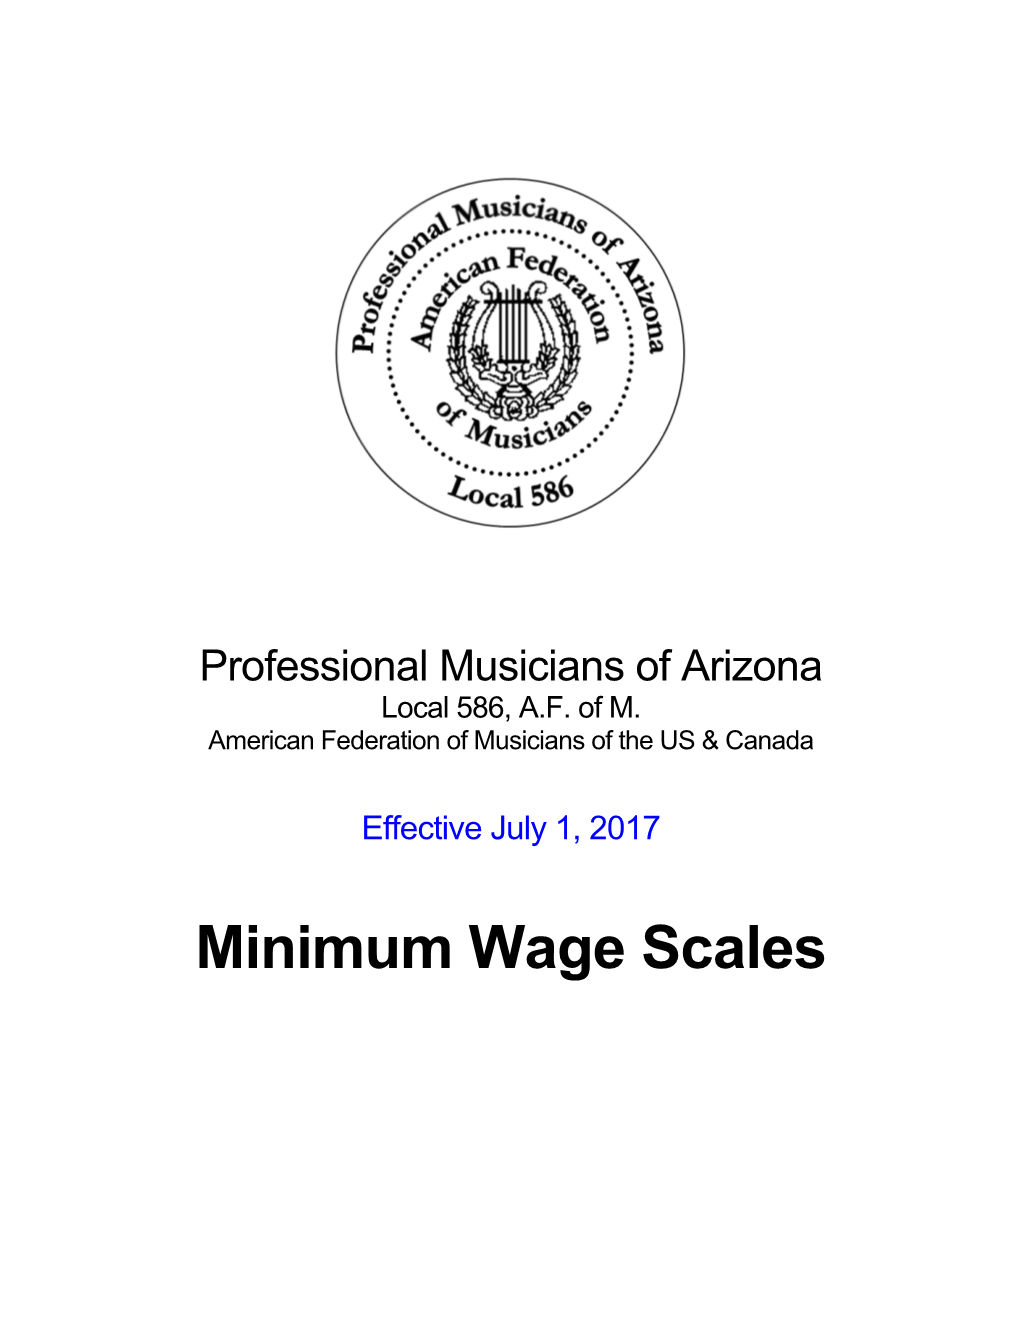 Minimum Wage Scales